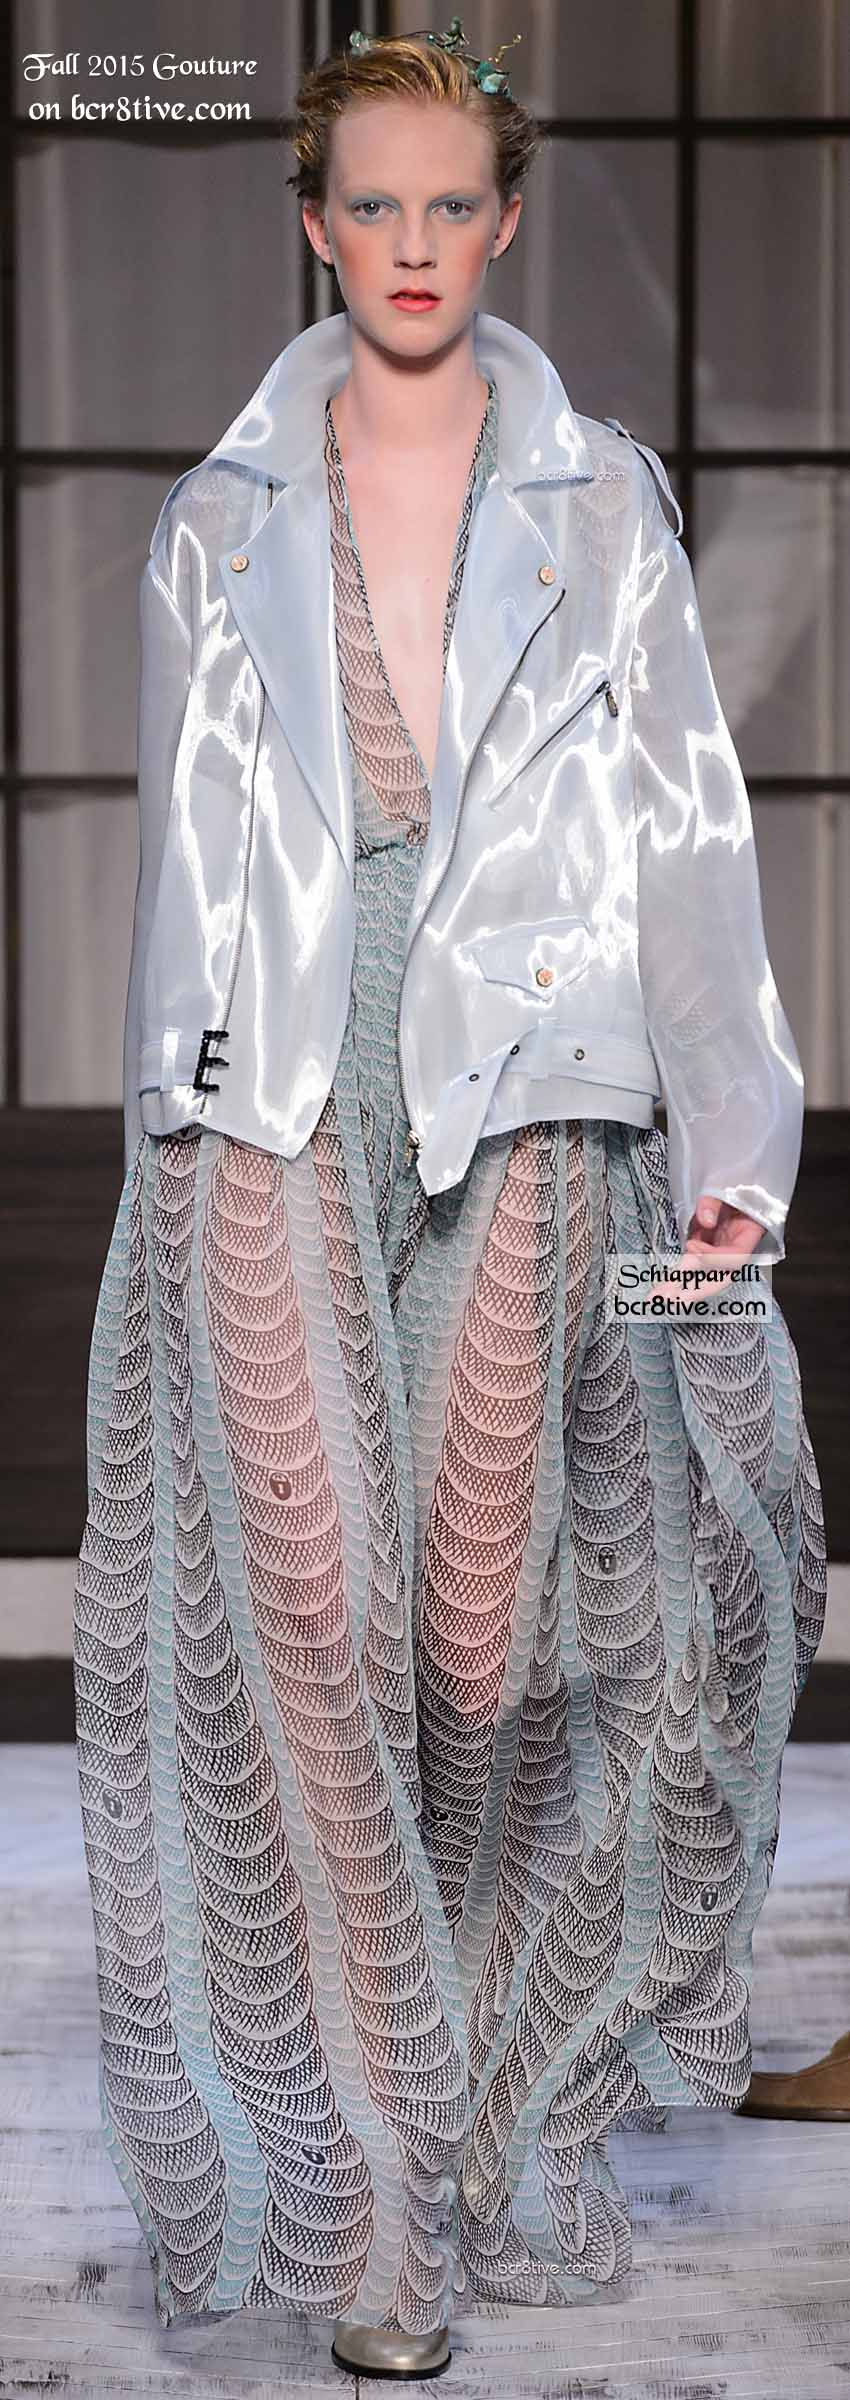 Schiapparelli Couture Fall 2015-16